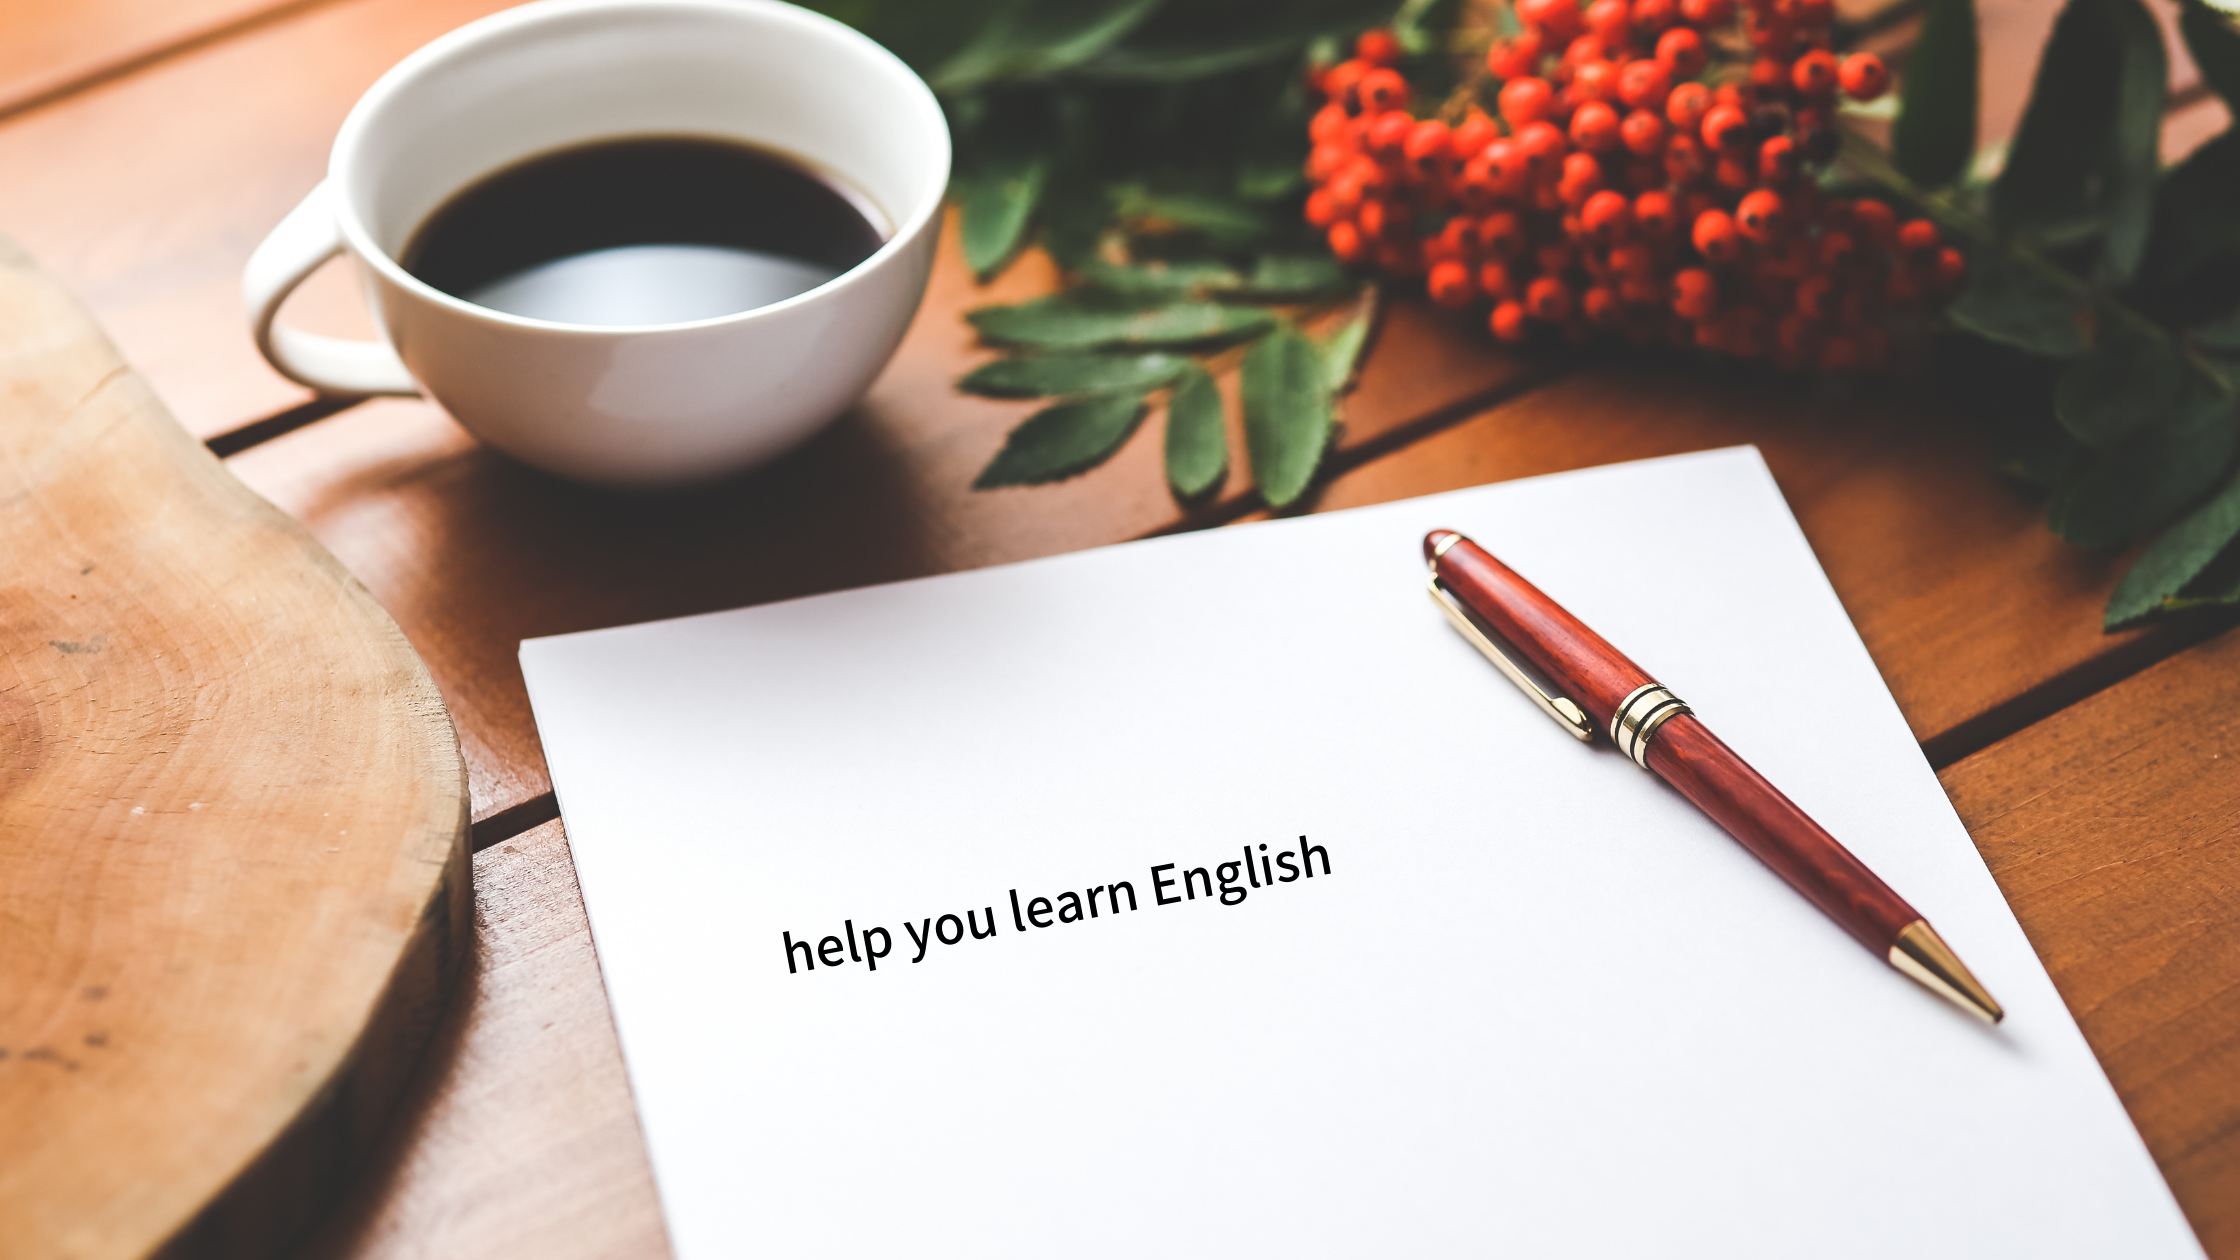 help you learn English